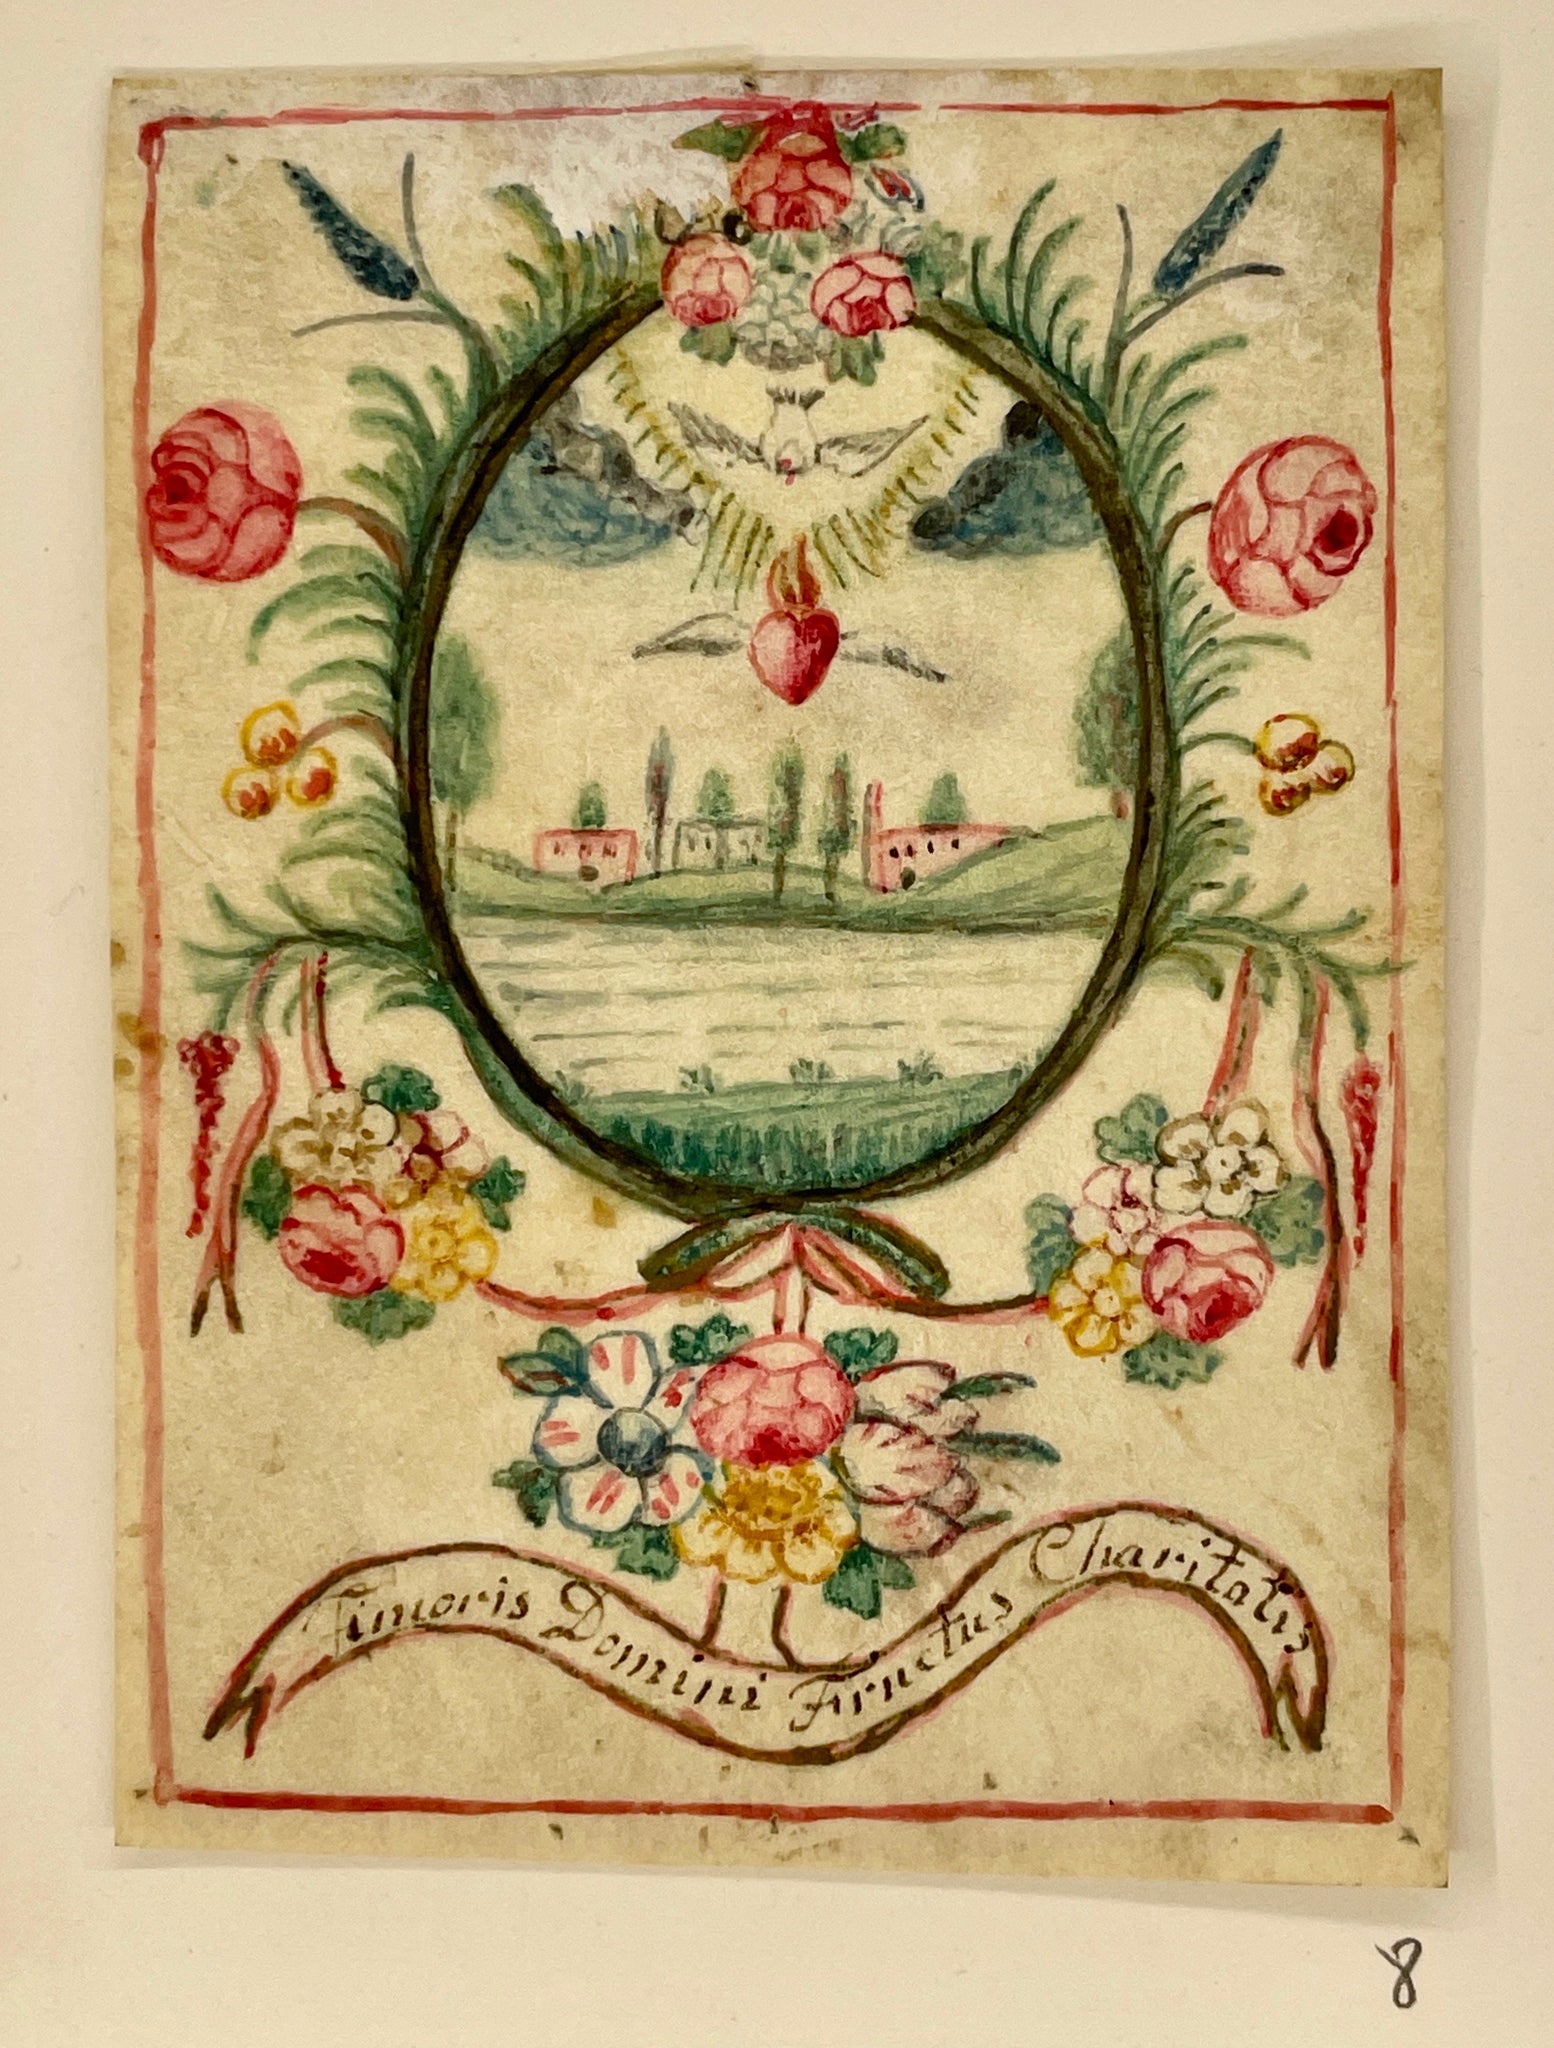 #8 - Handpainted Devotional Prayer Card, ca. 1820